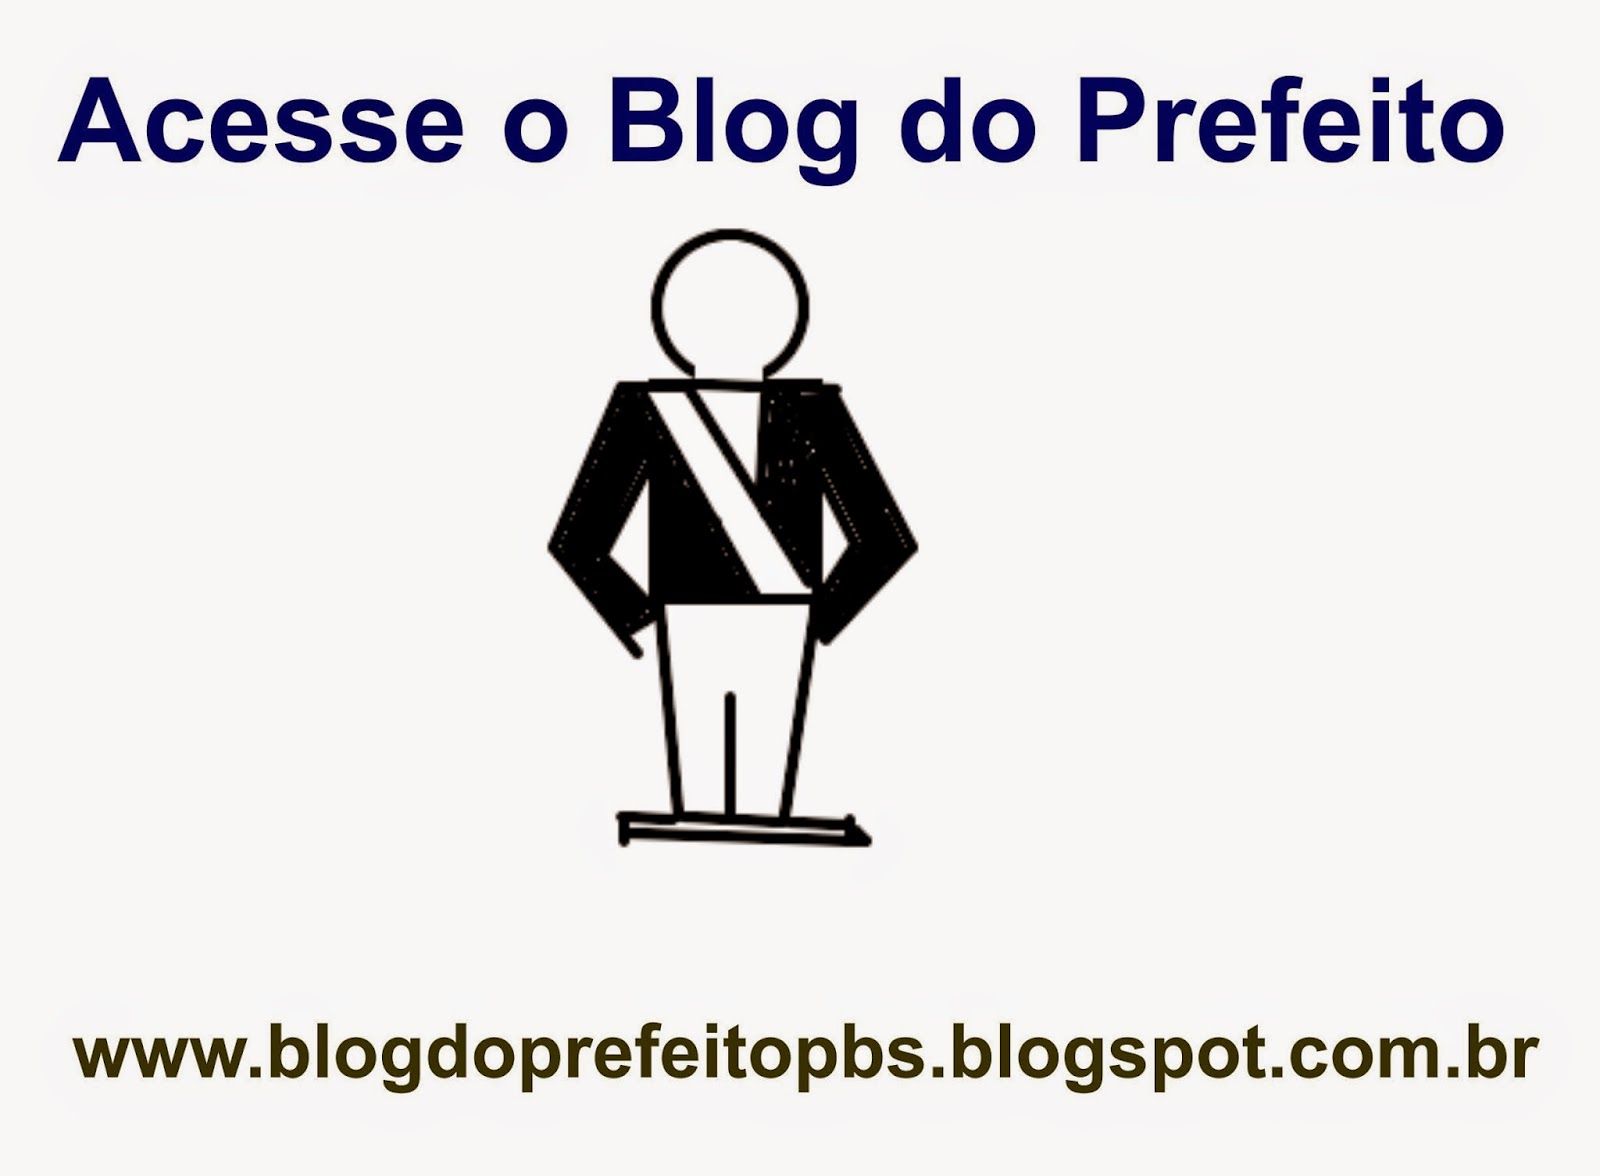 http://blogdoprefeitopbs.blogspot.com.br/